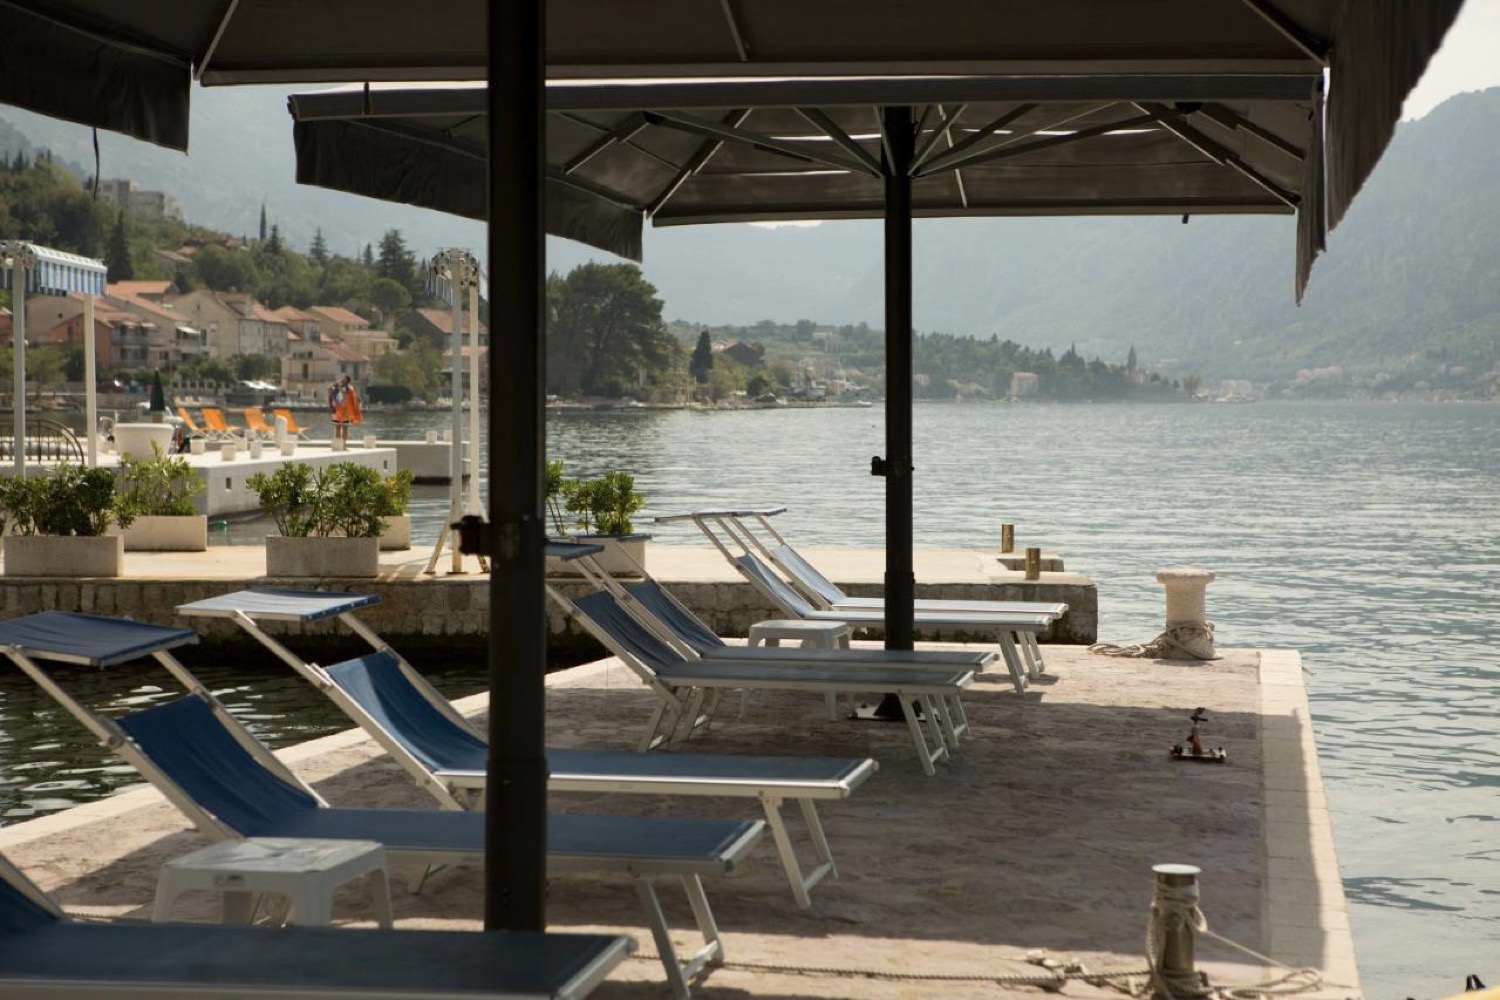 Rekomendowane hotele w Zatoce Kotorskiej.